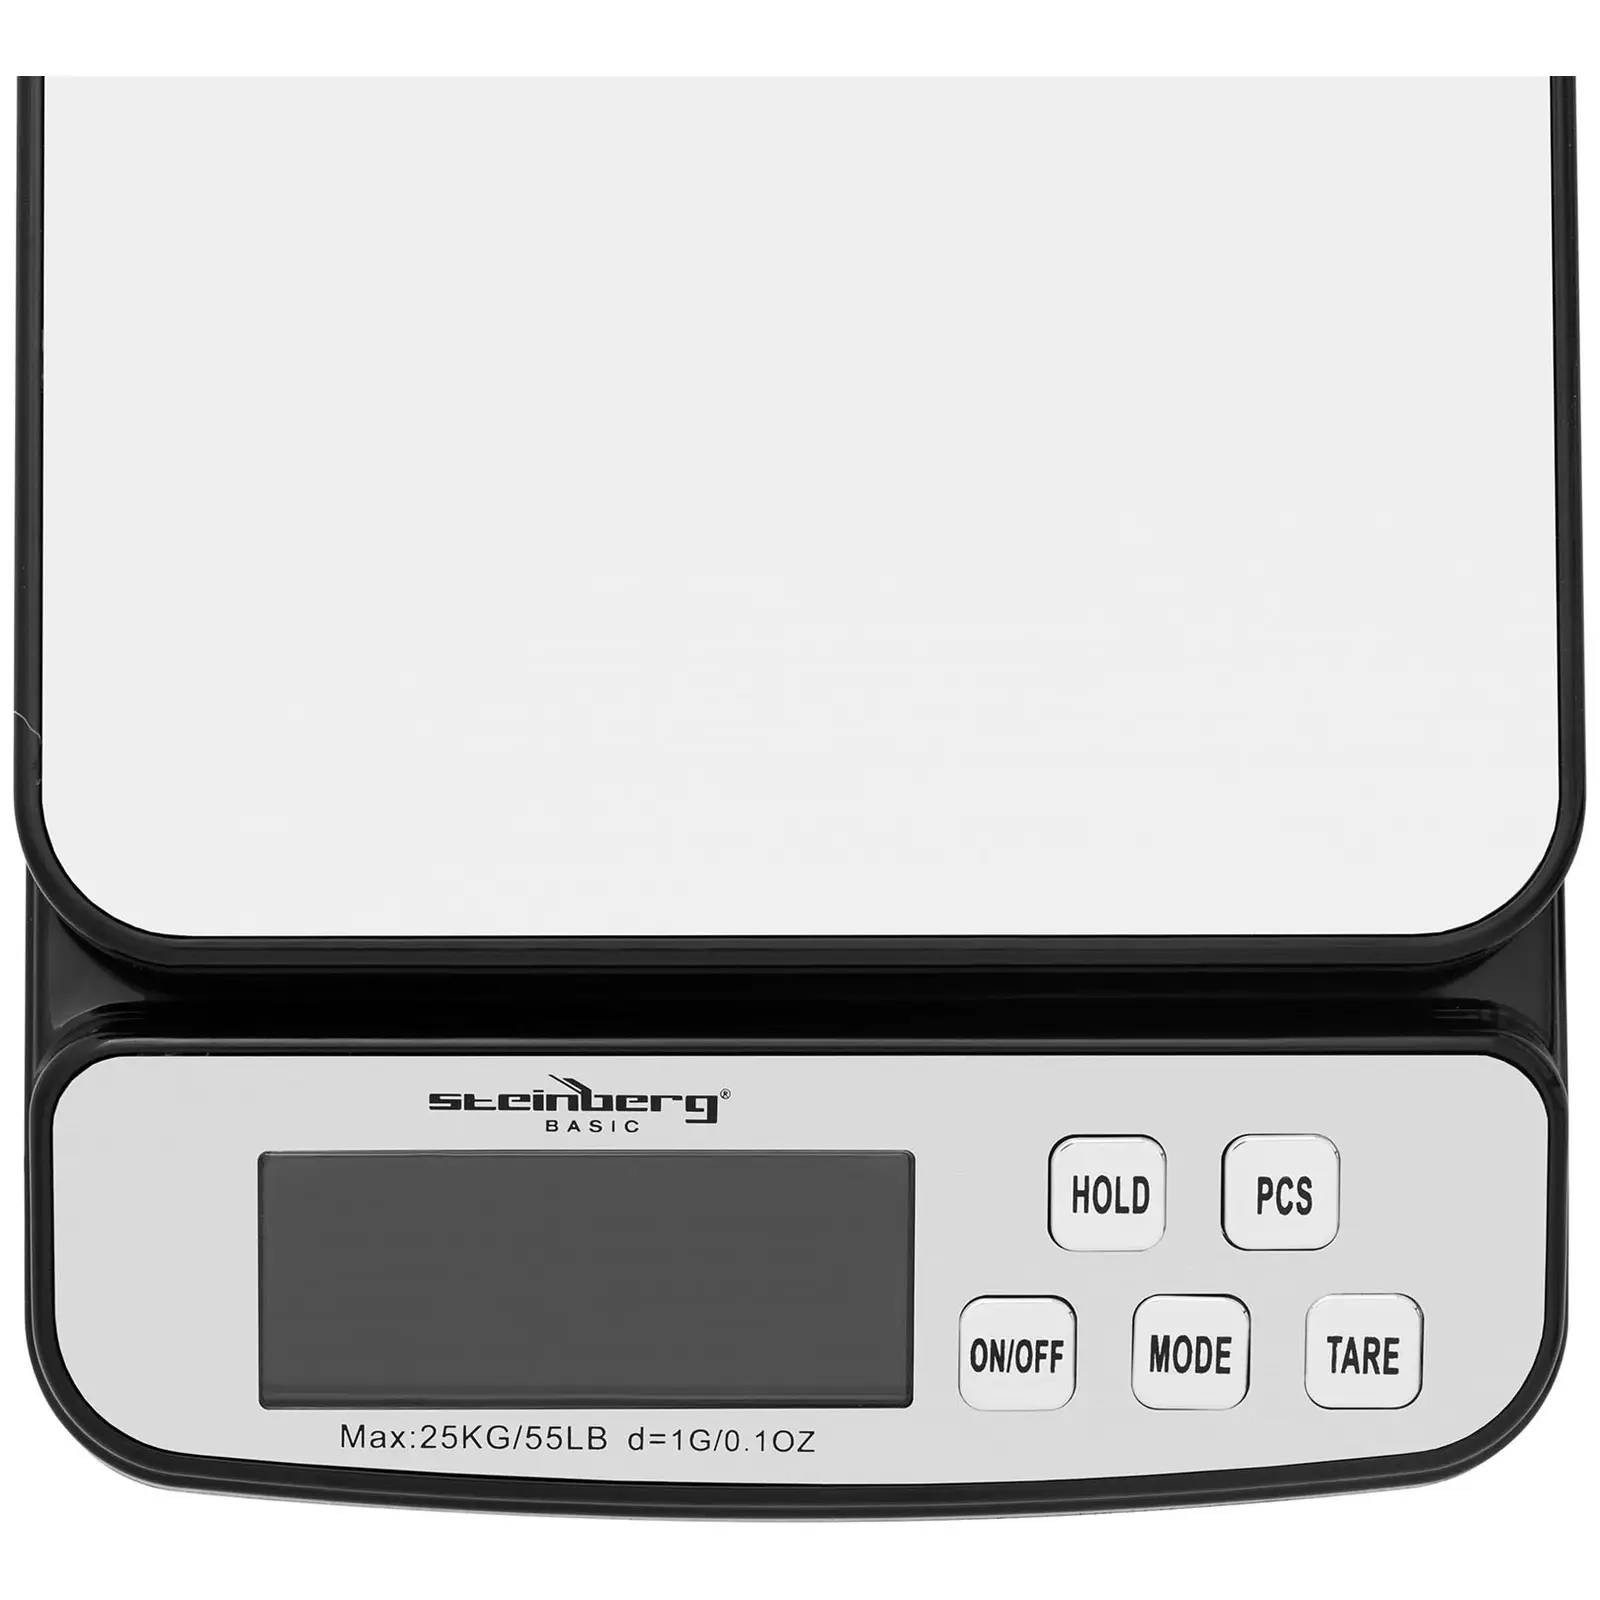 Ocasión Balanza pesacartas digital - 25 kg / 1 g